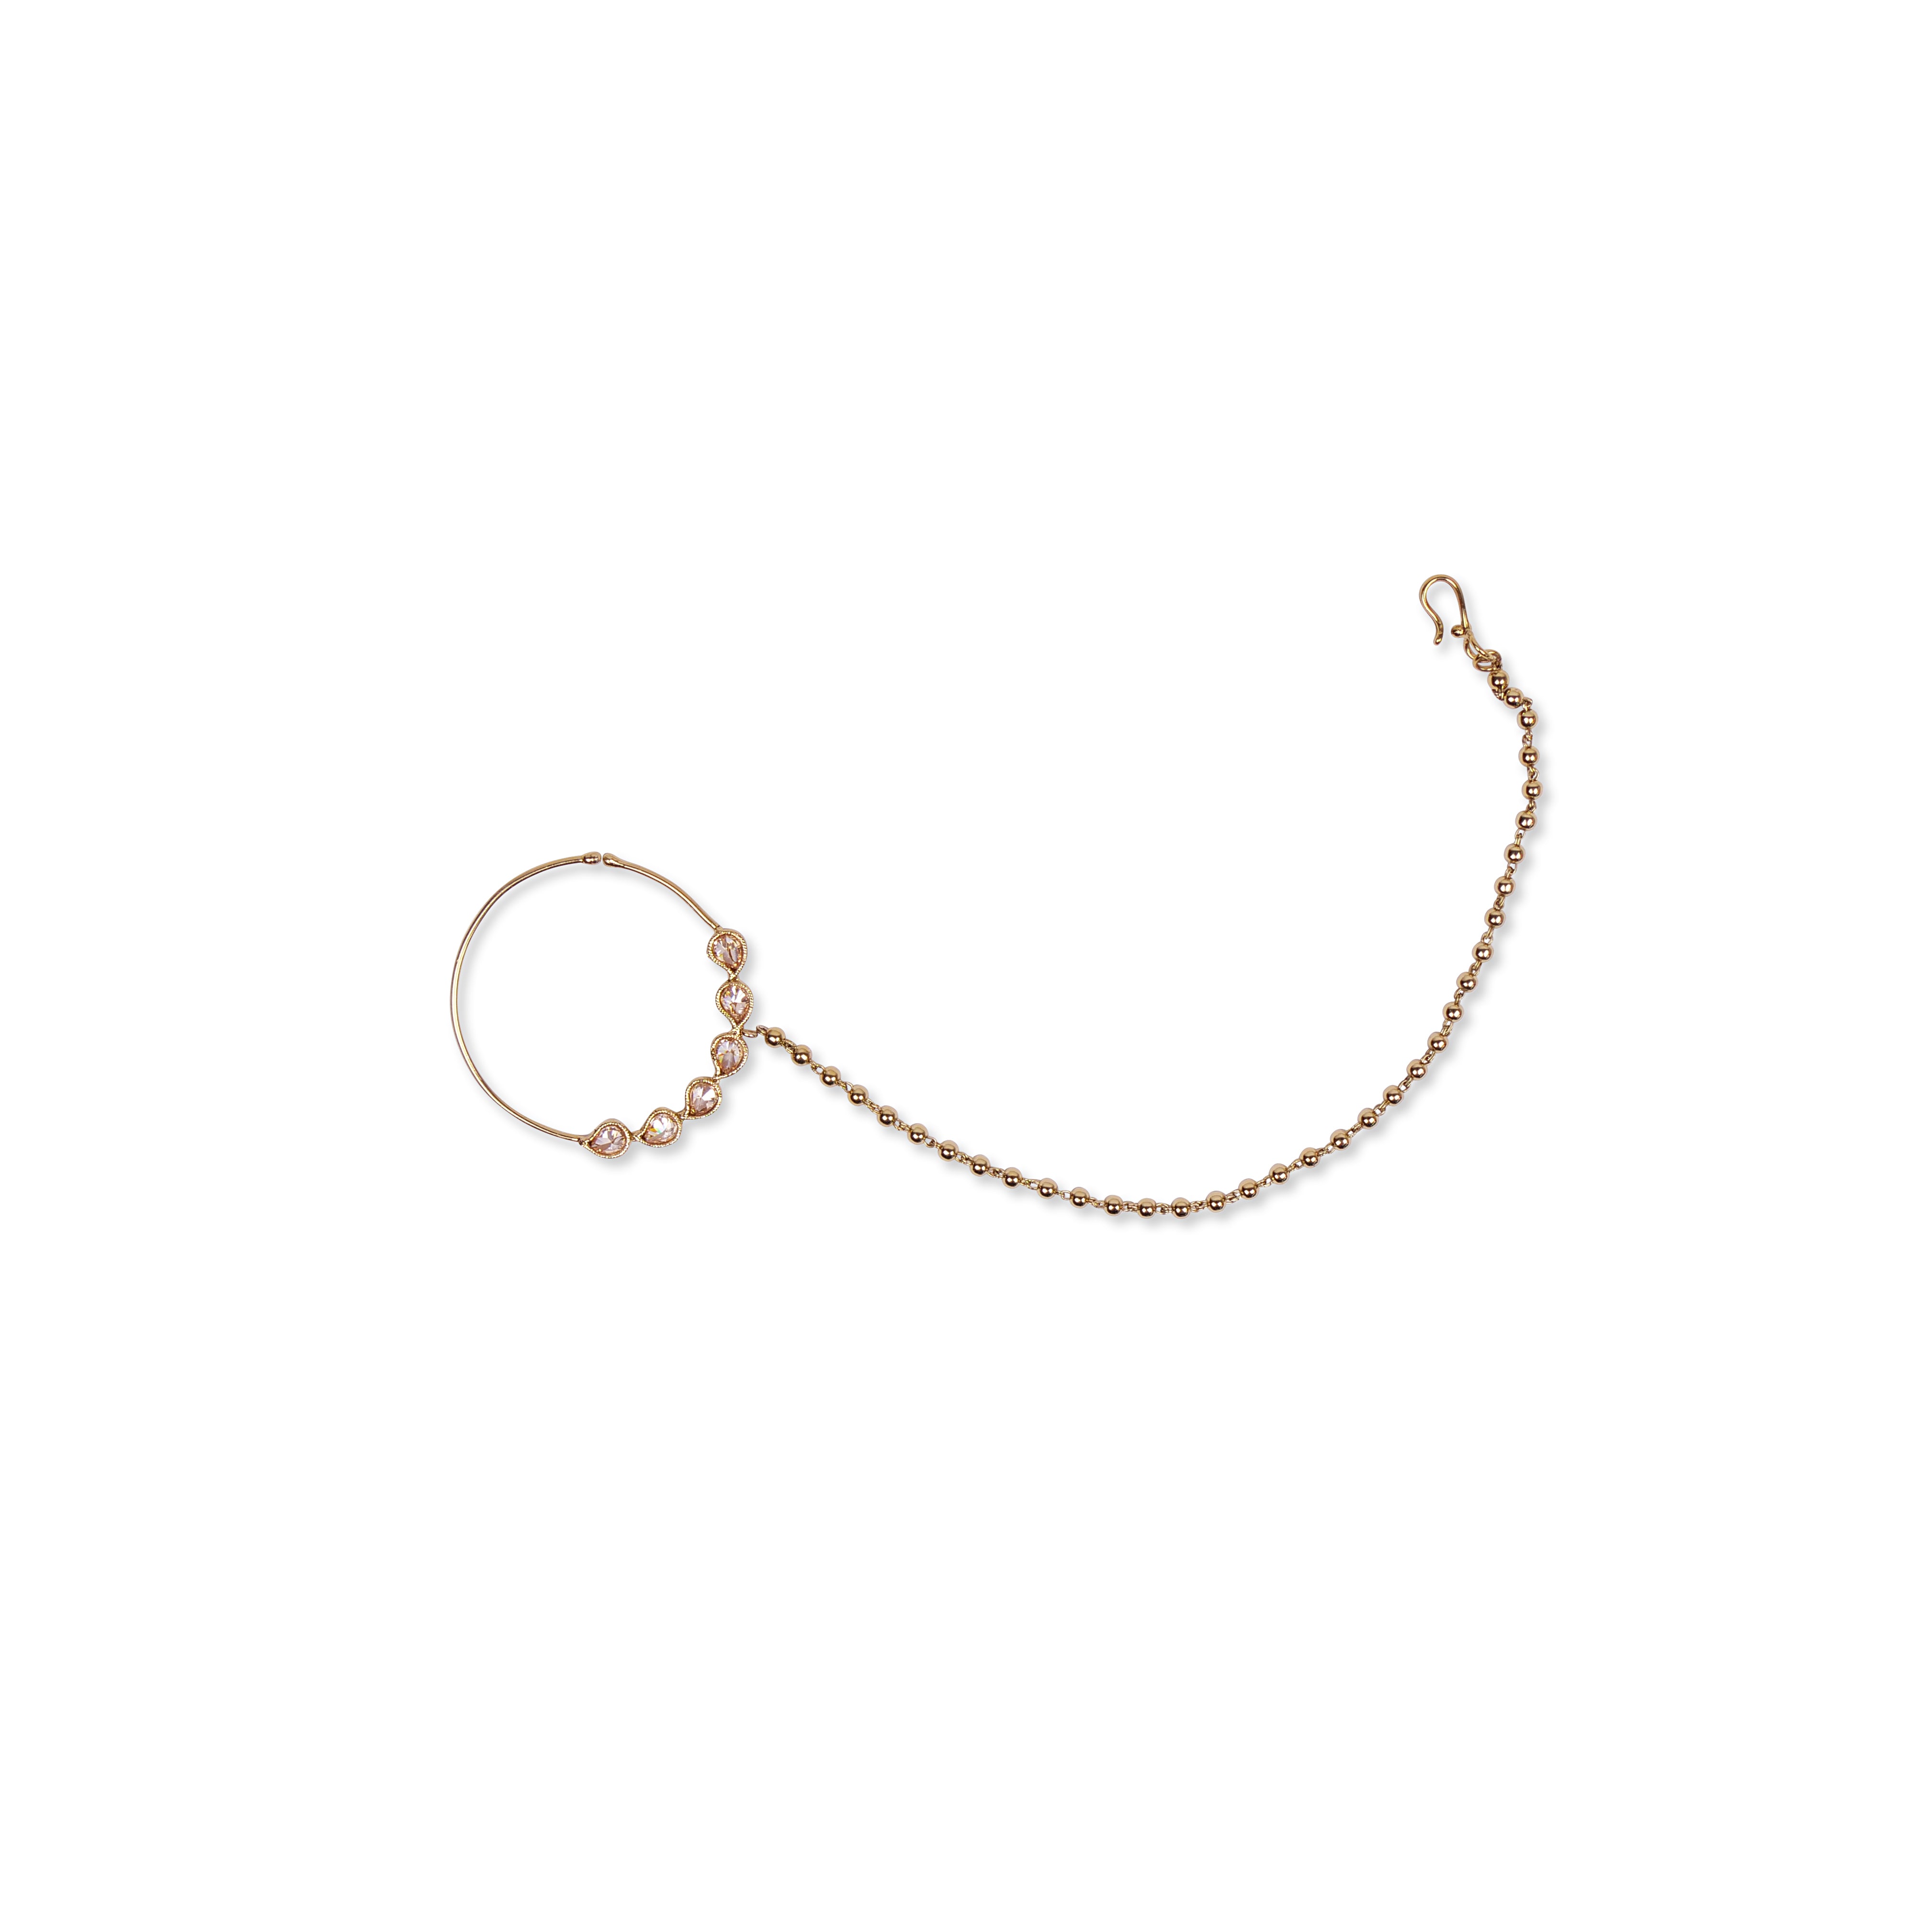 1.5" Teardrop Bridal Nose Ring in Antique Gold